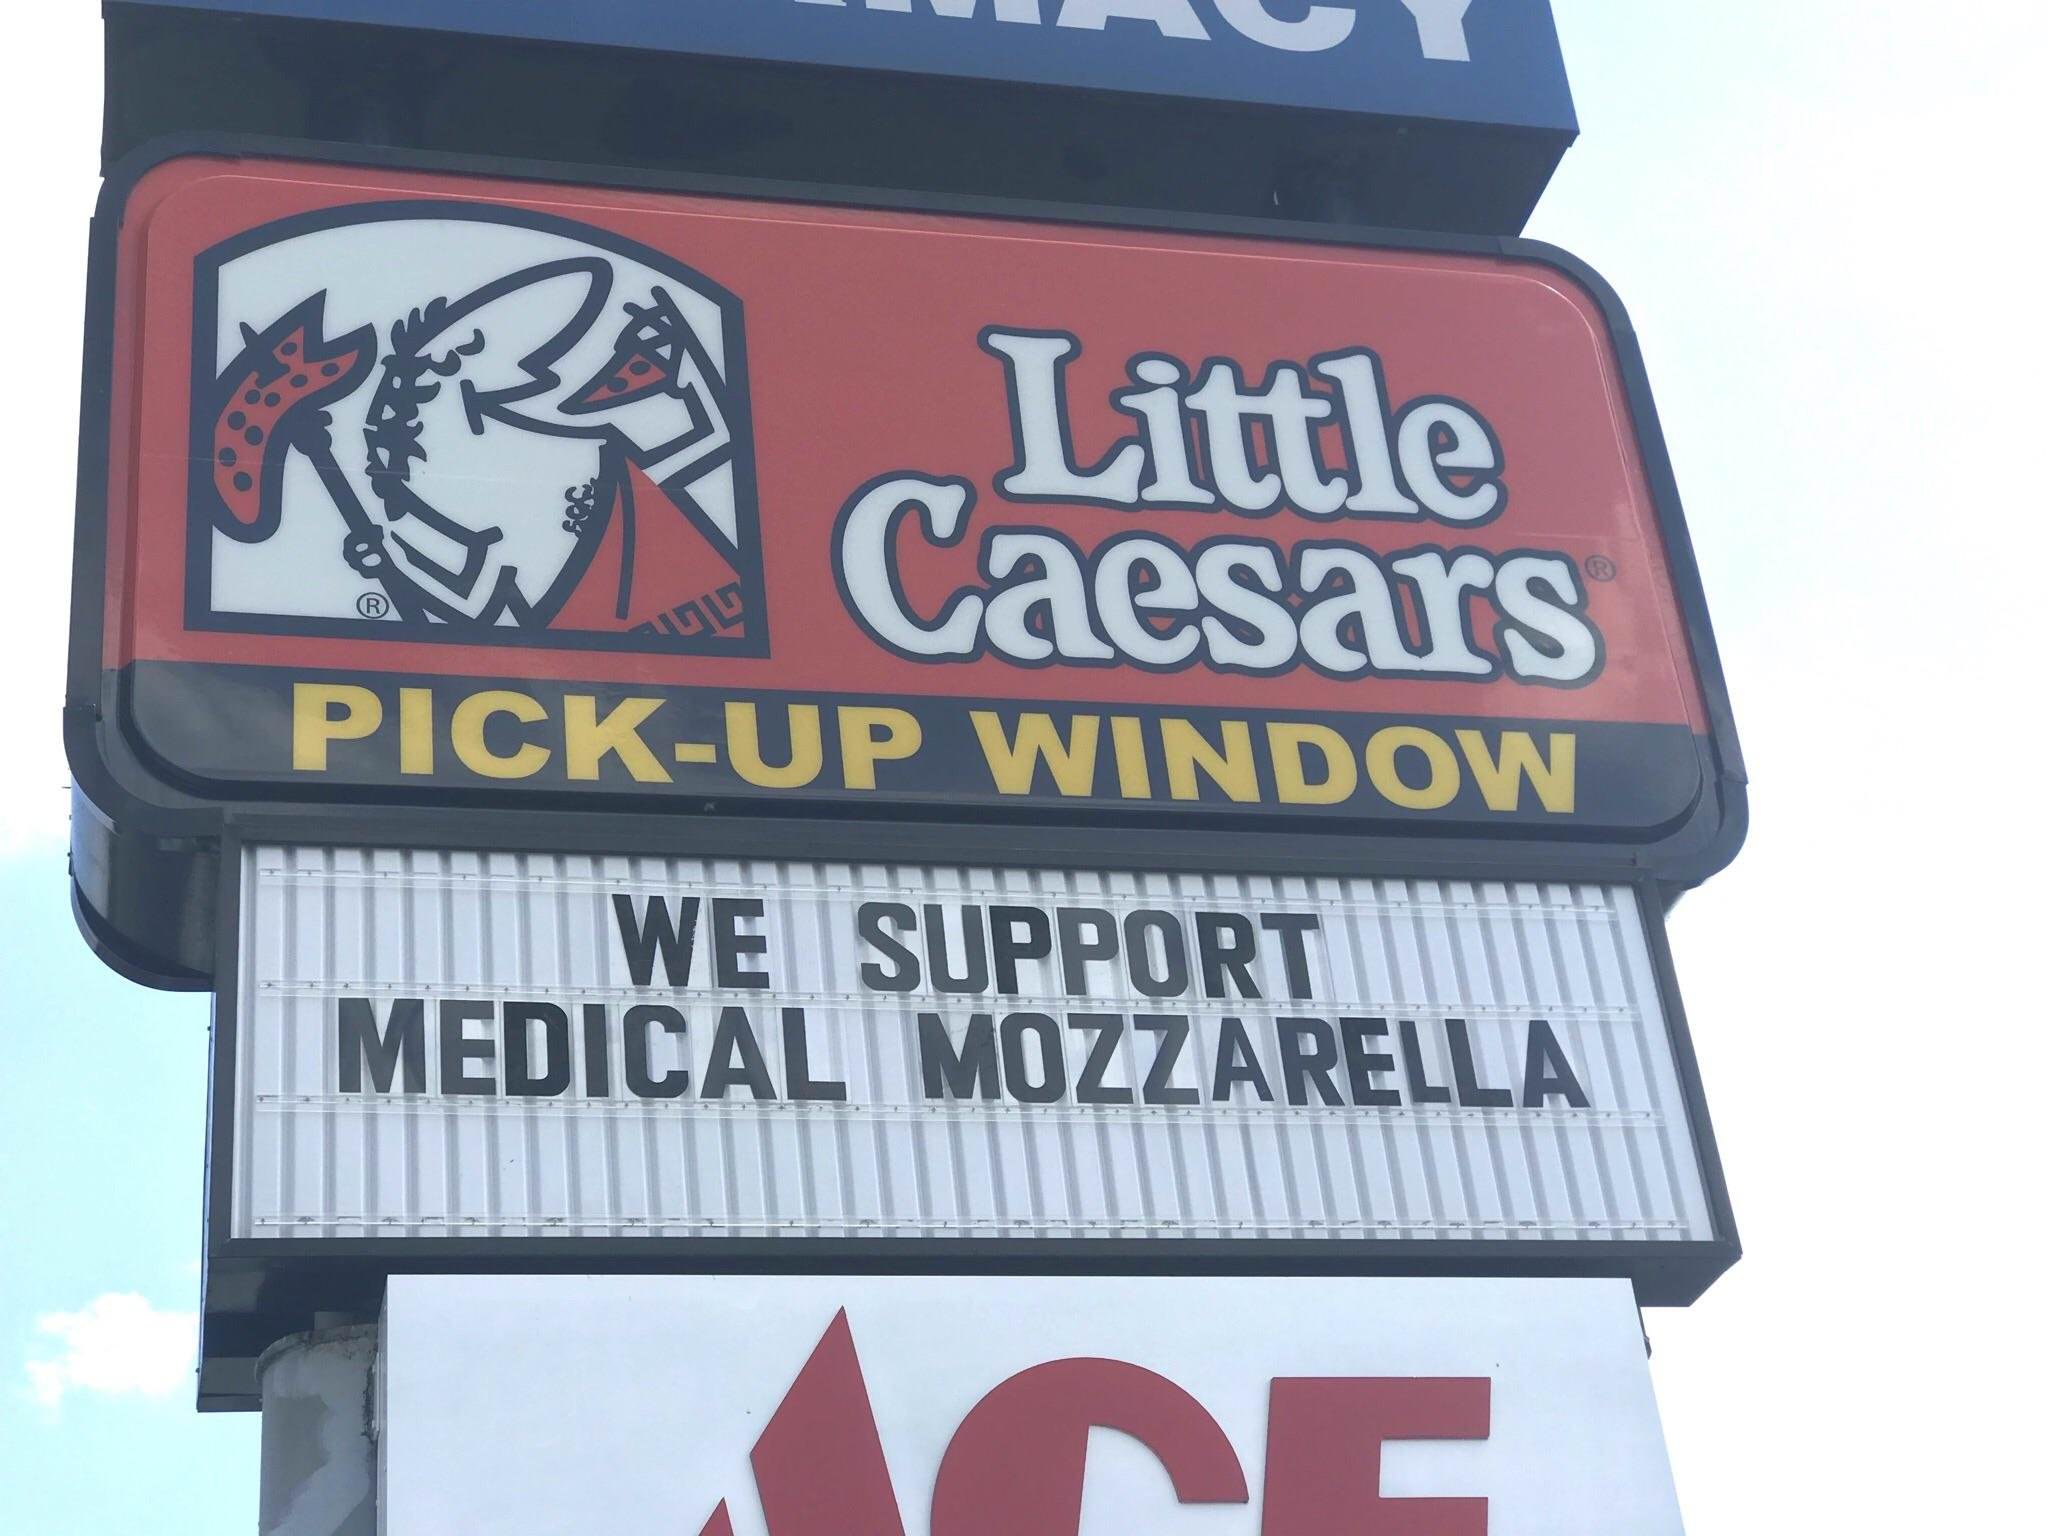 little caesars pizza - Kc Little Little Caesars PickUp Window We Support Medical Mozzarella